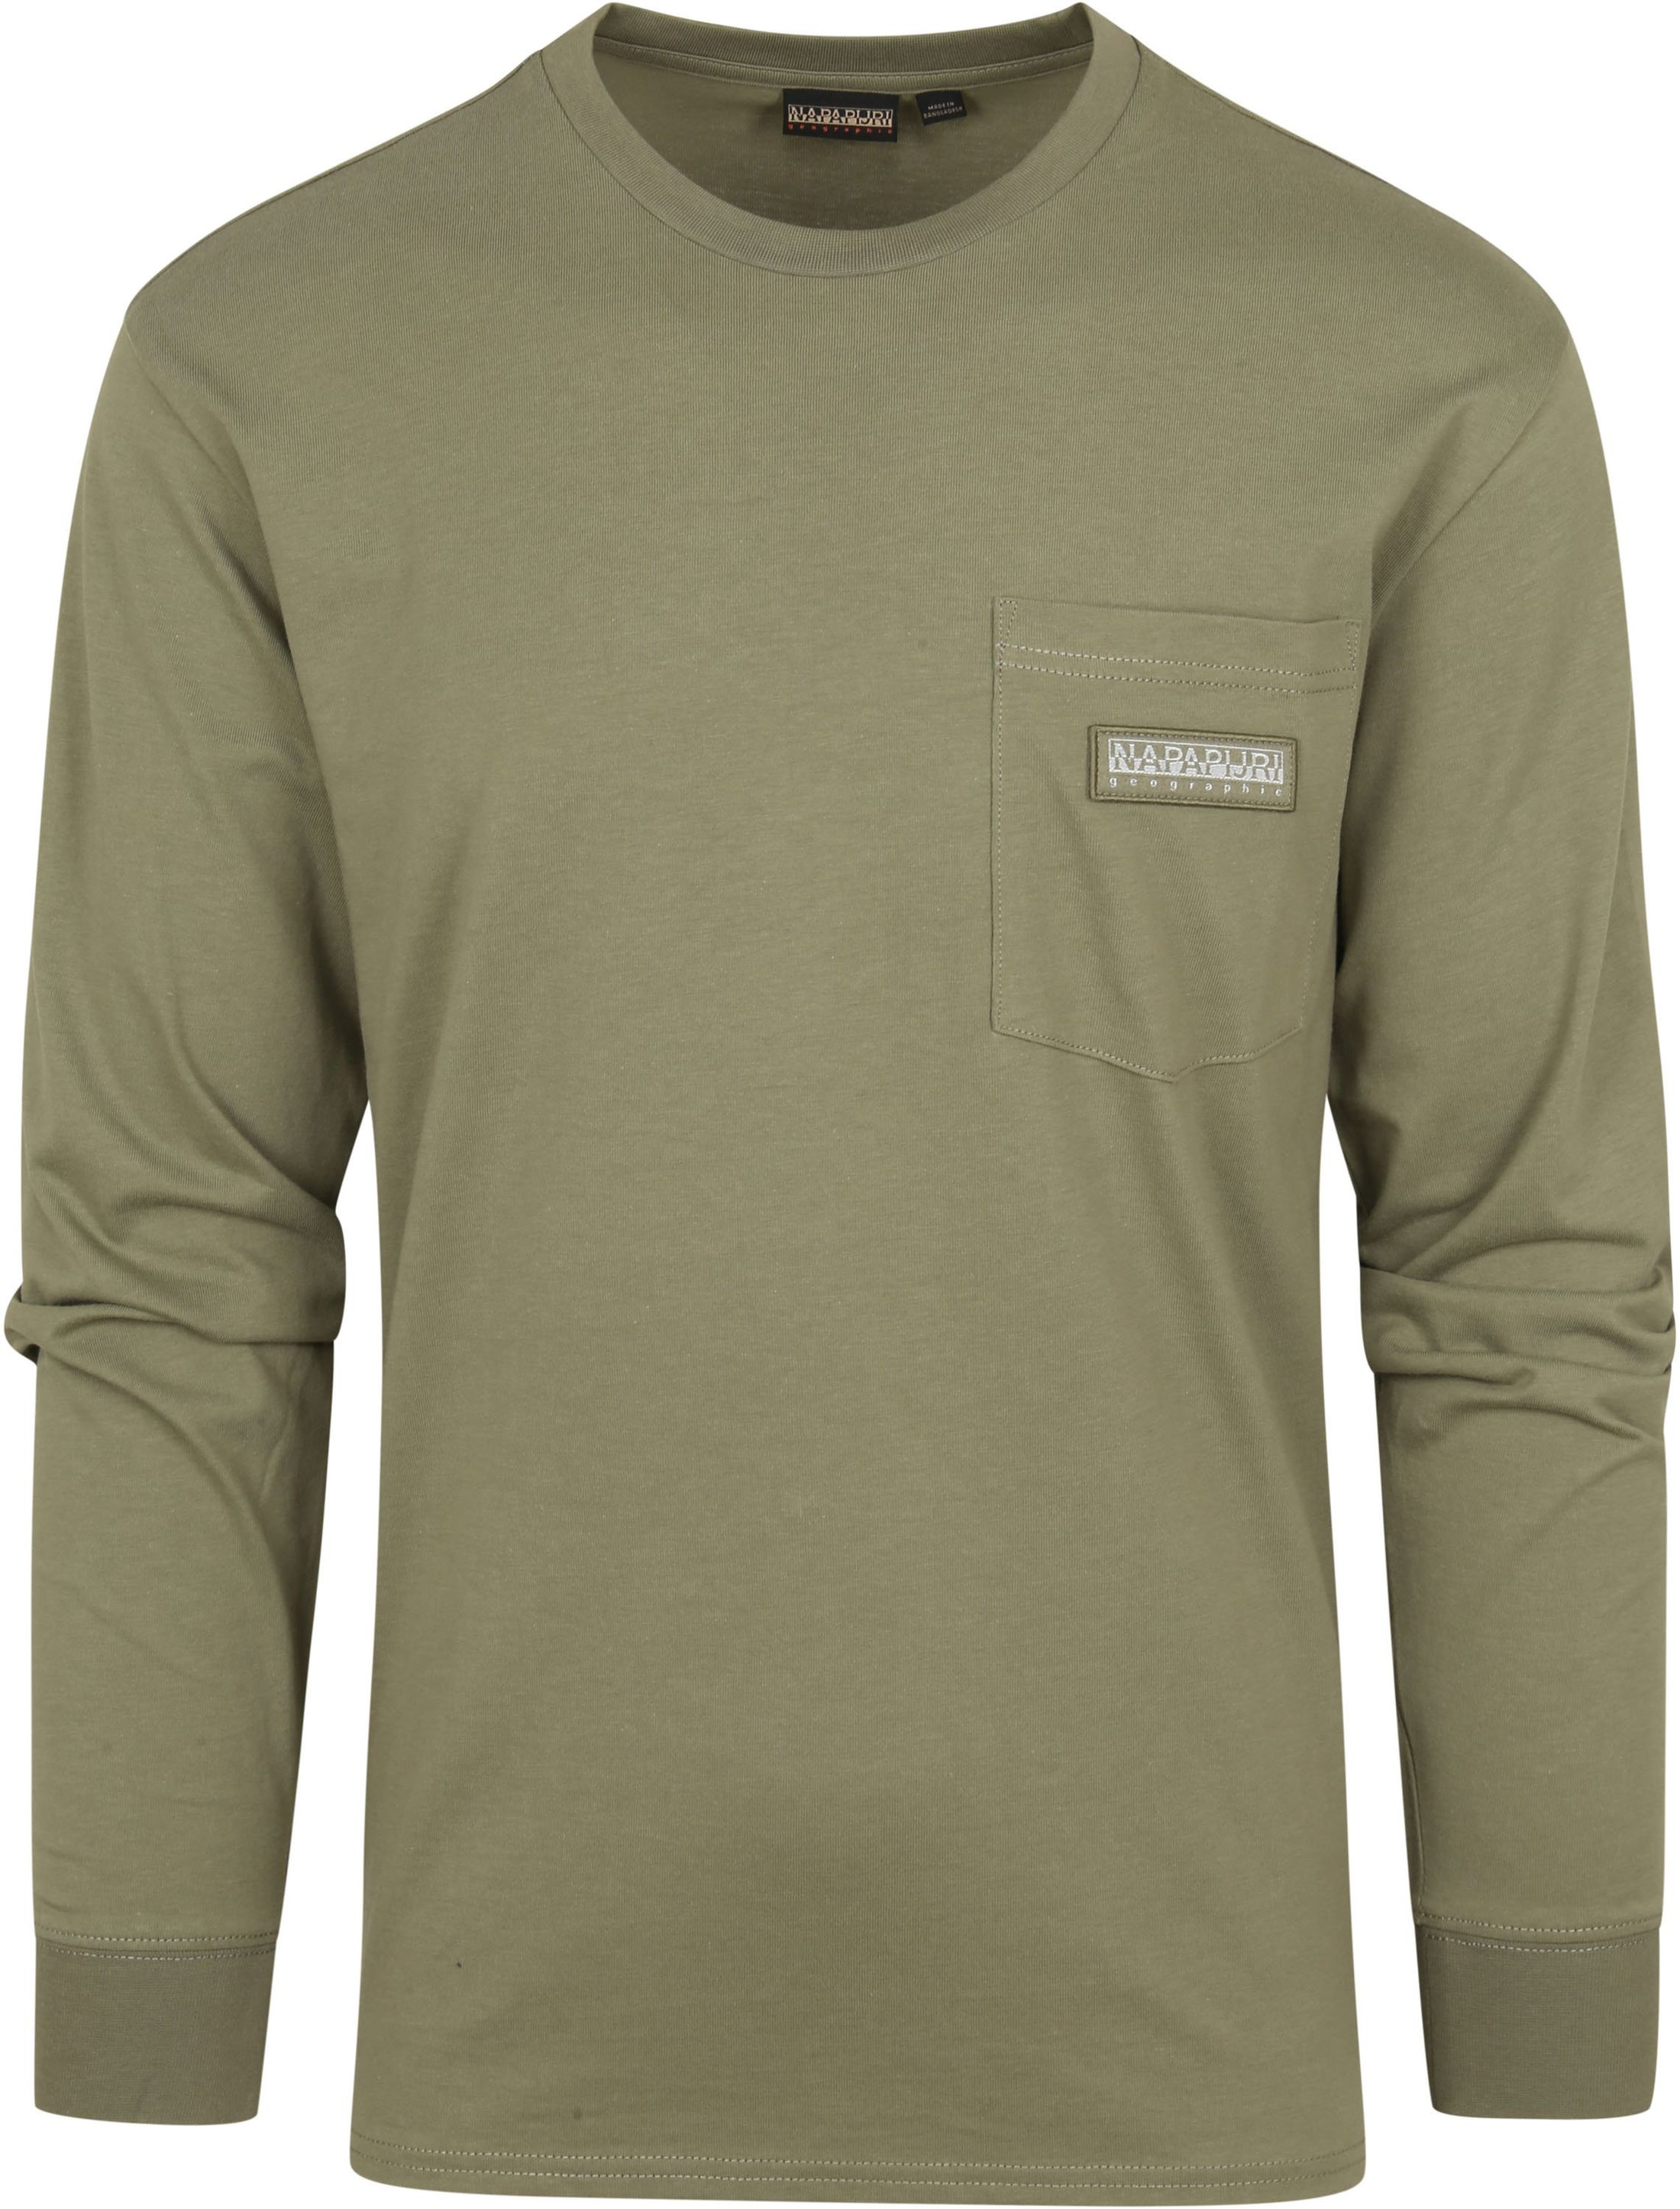 Napapijri S-Morgex Longsleeve T Shirt Green size L